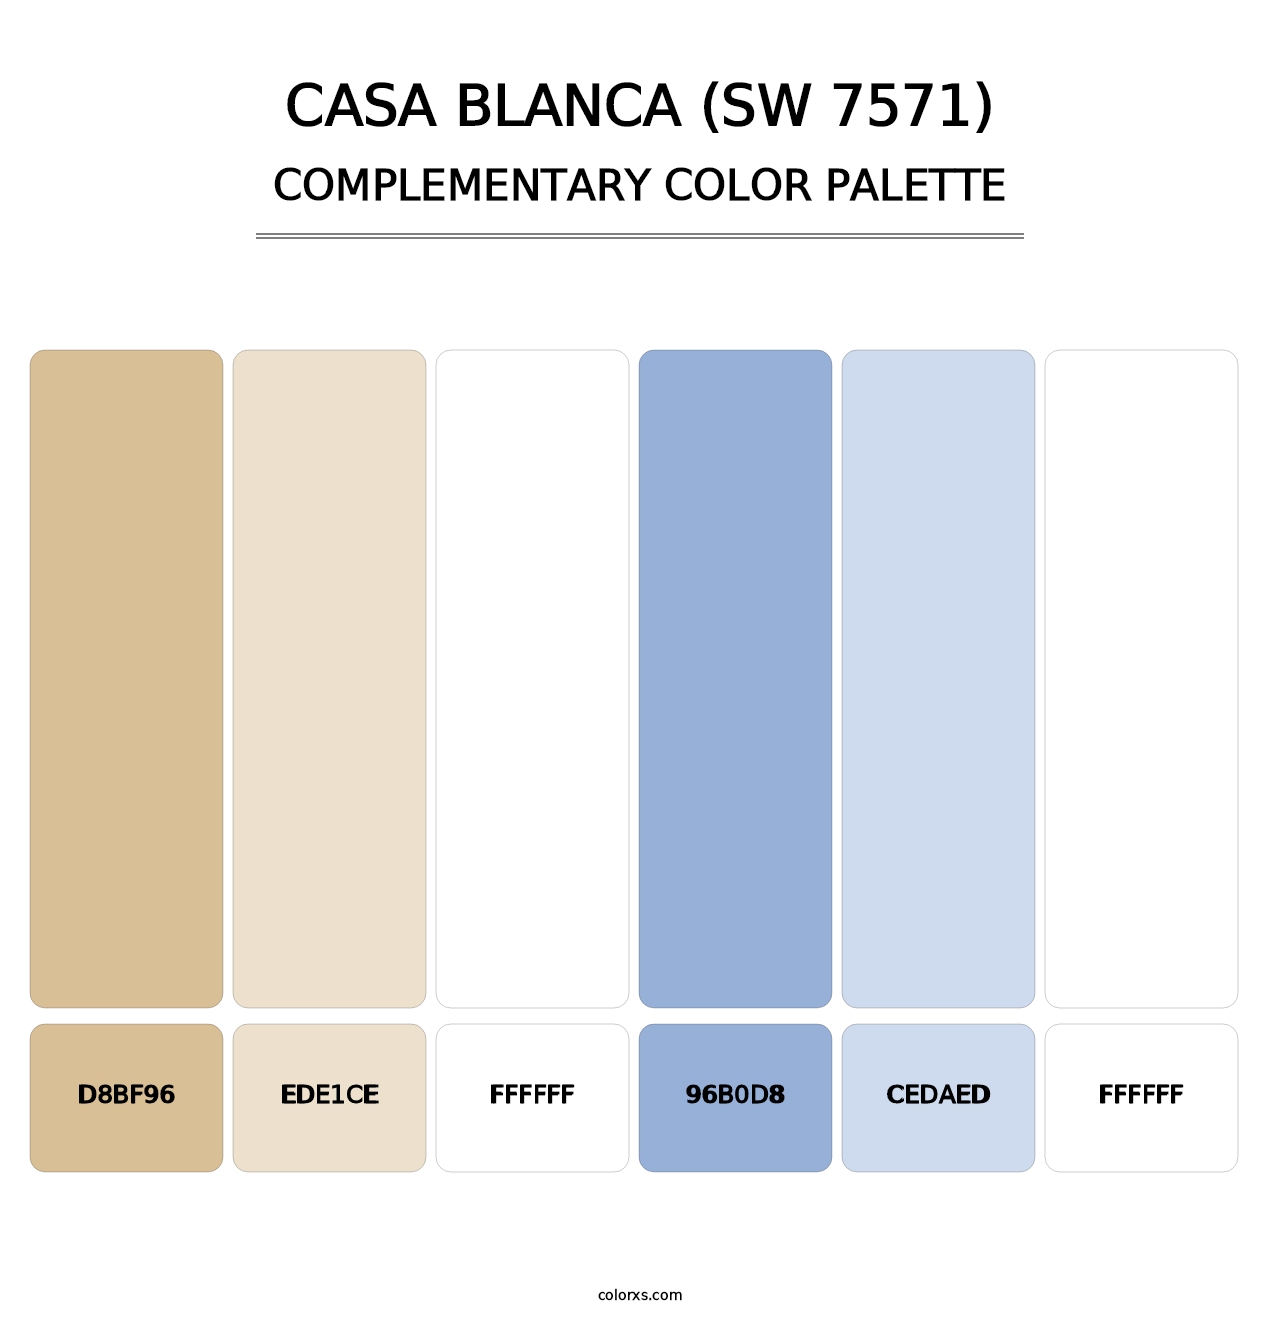 Casa Blanca (SW 7571) - Complementary Color Palette